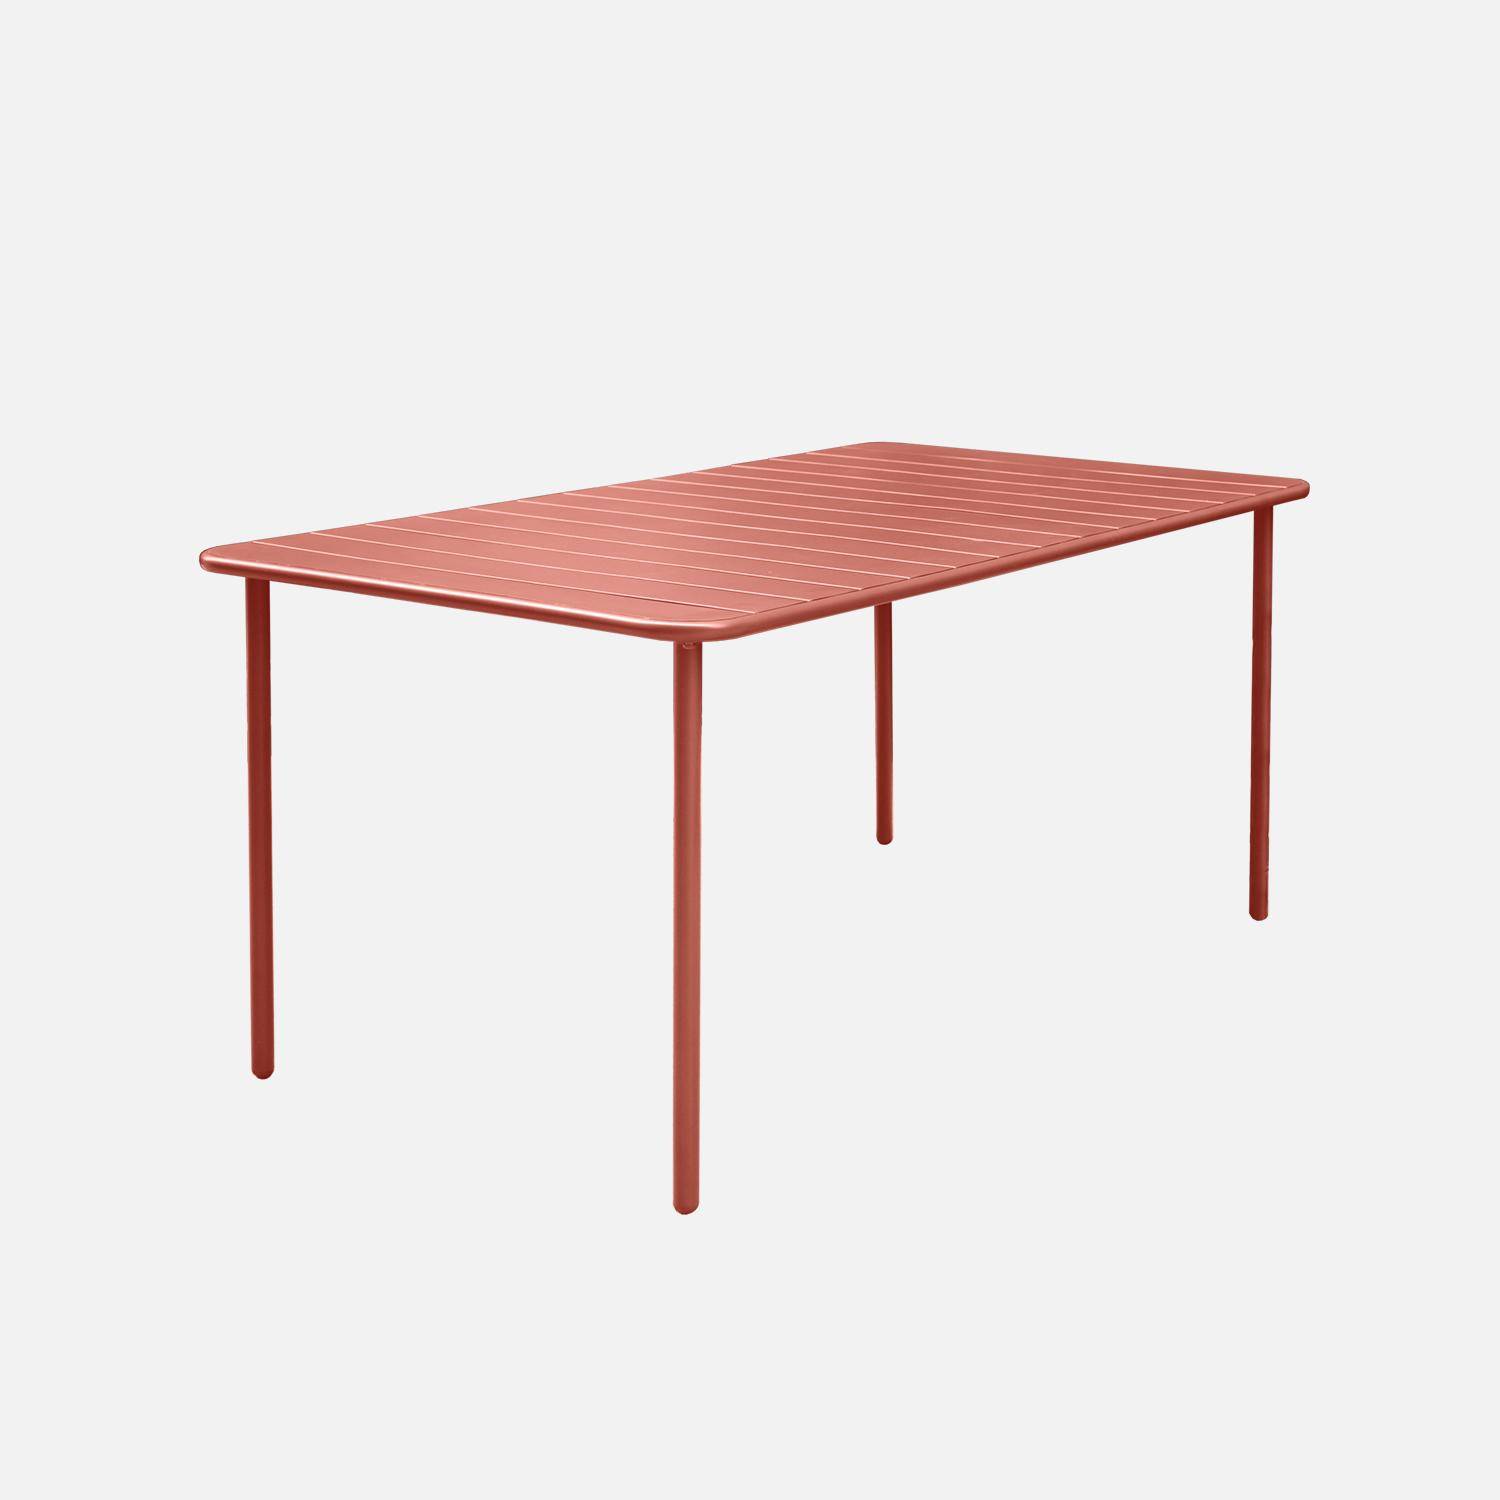 6-8 Seater metal garden table, 160x90xH72.5cm, Terracotta Photo3